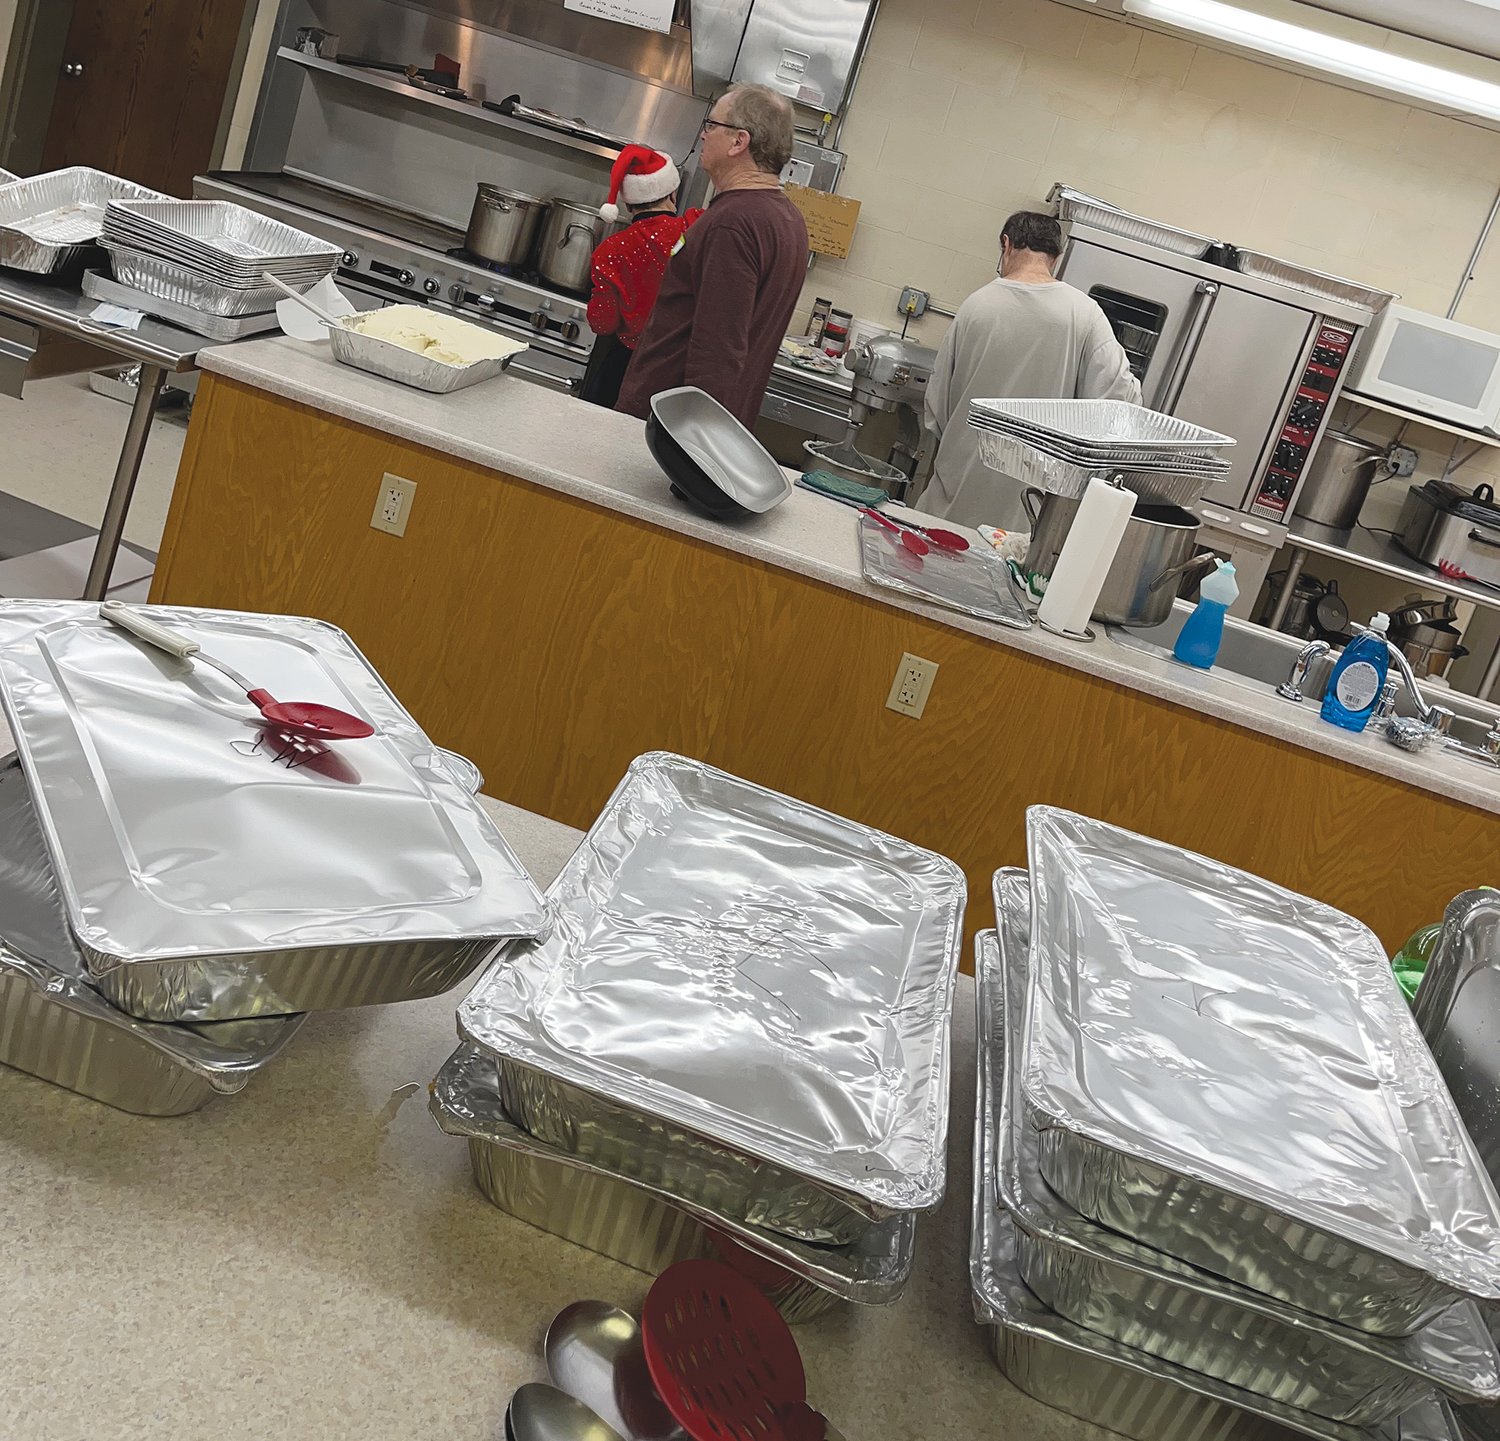 Volunteers work in the kitchen at First Baptist Church preparing meals.